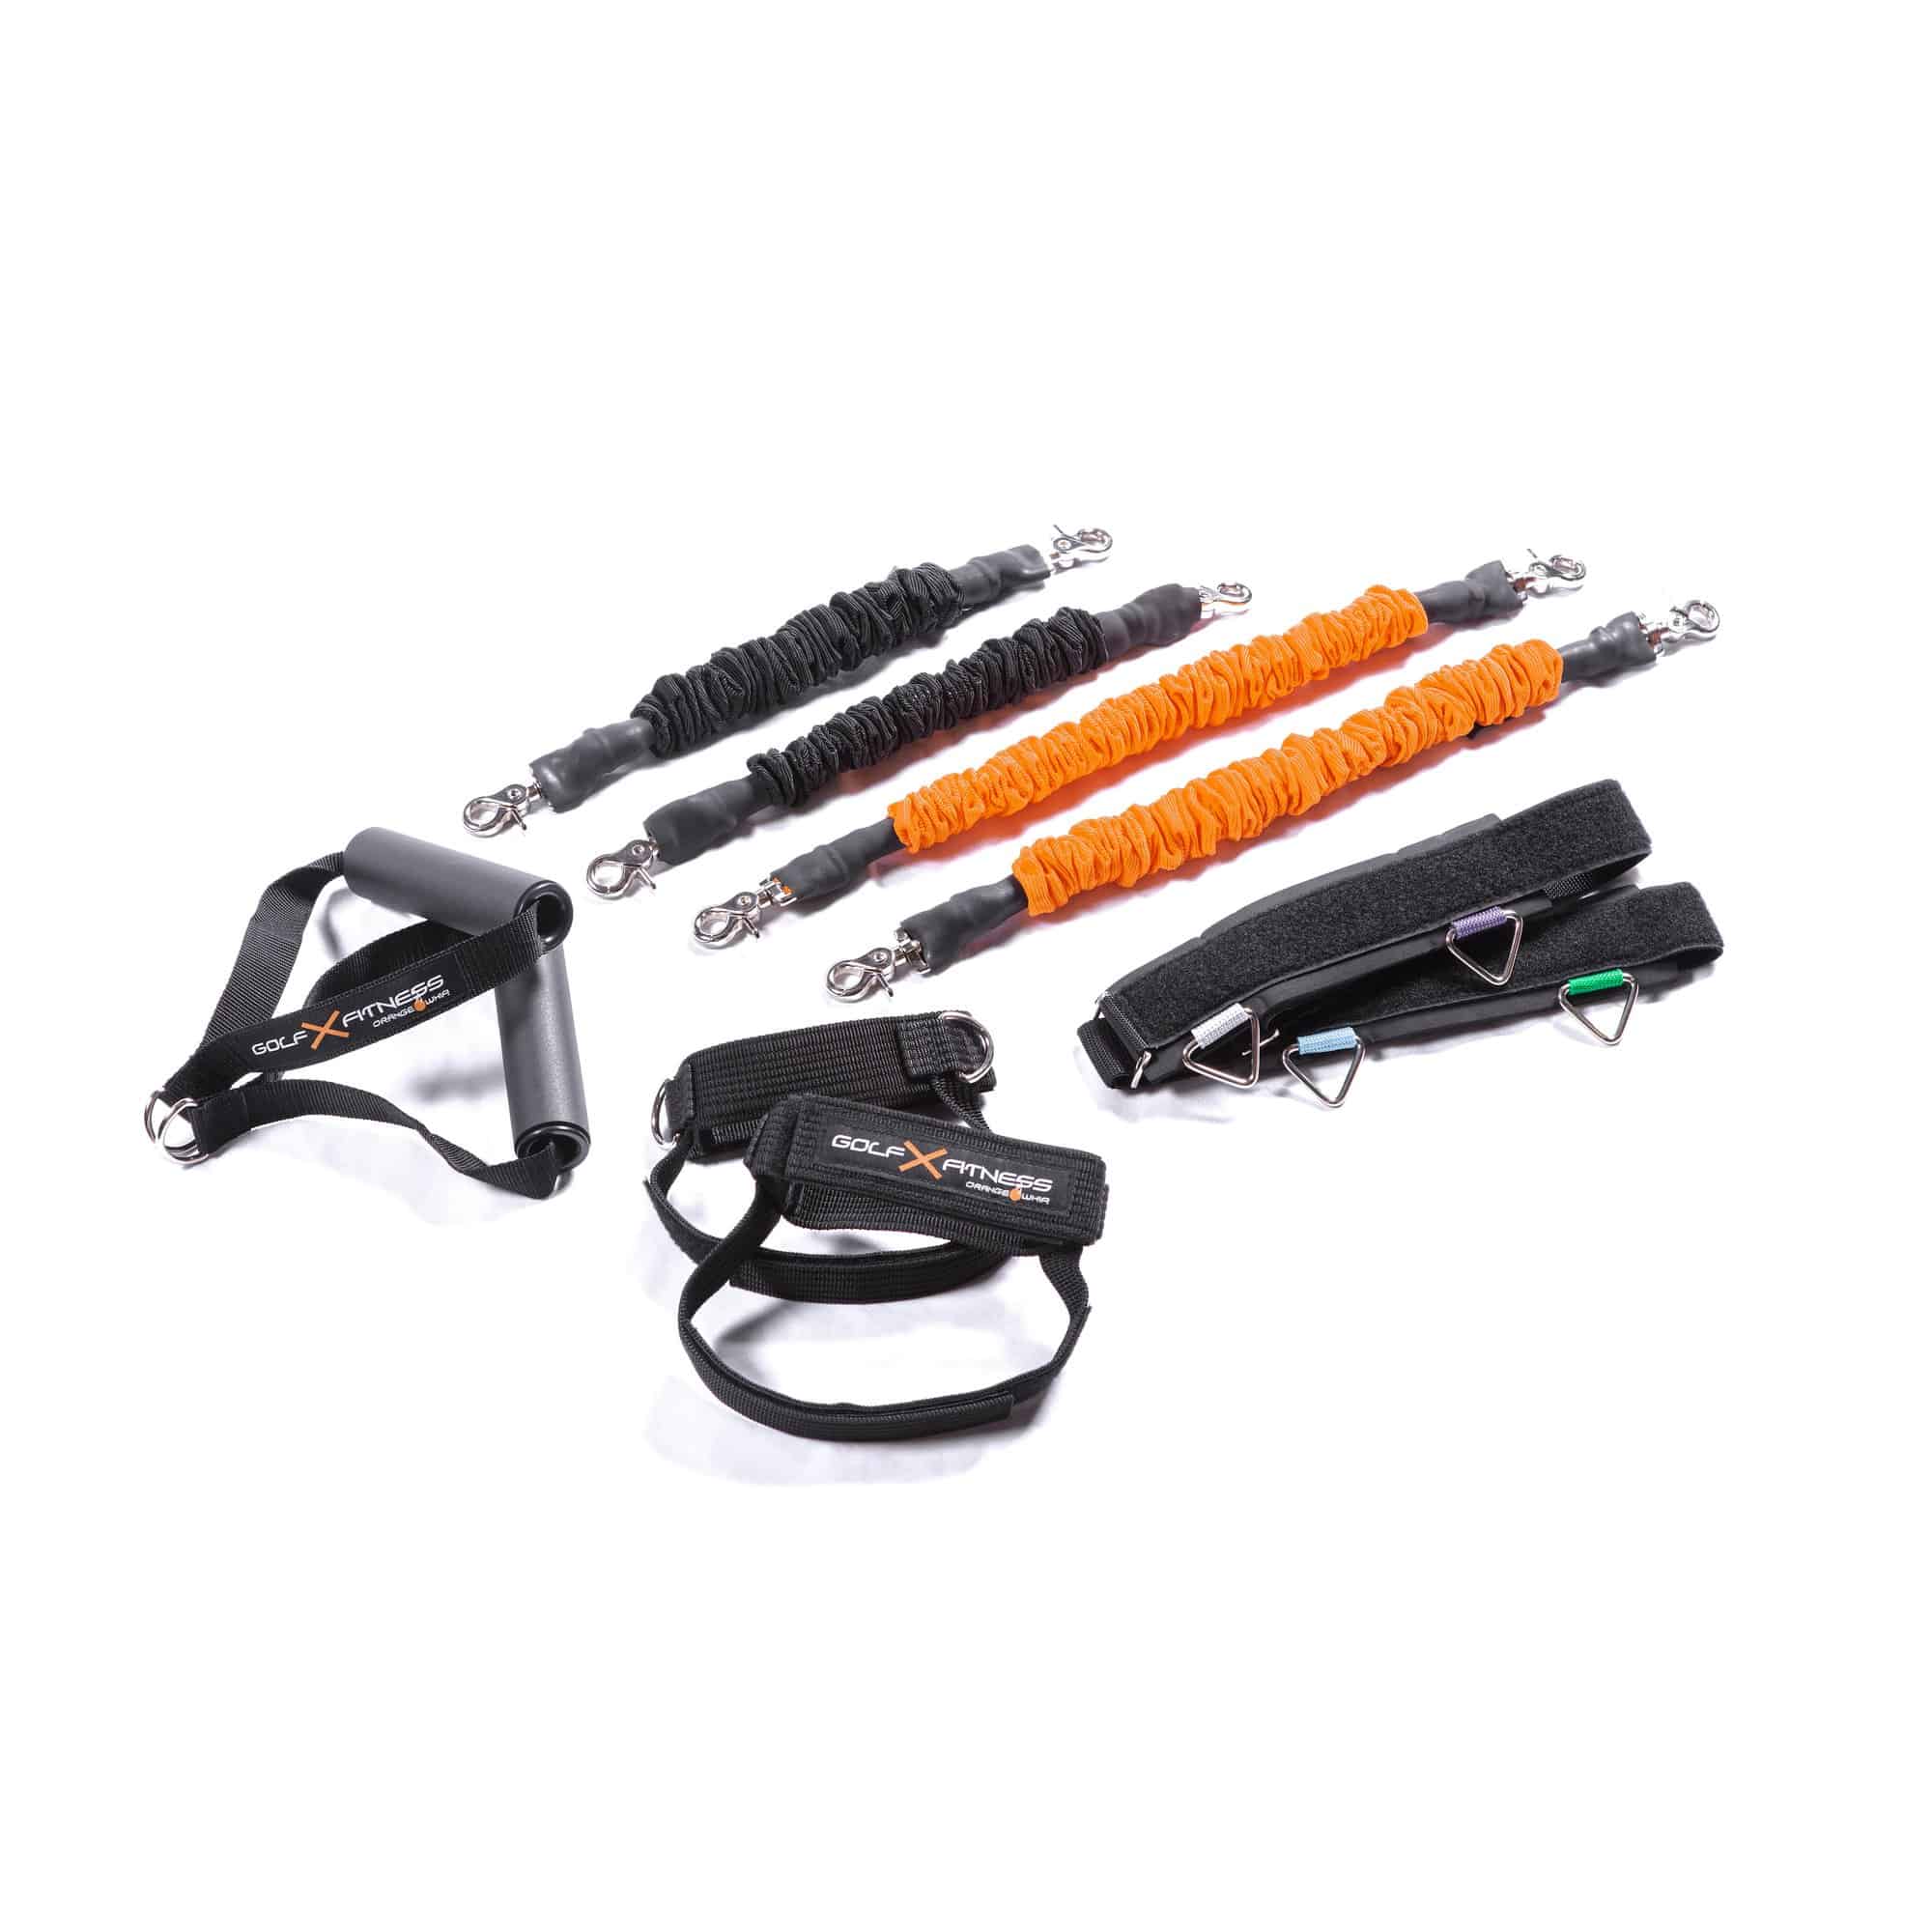 Orange Whip Power Strap Kit